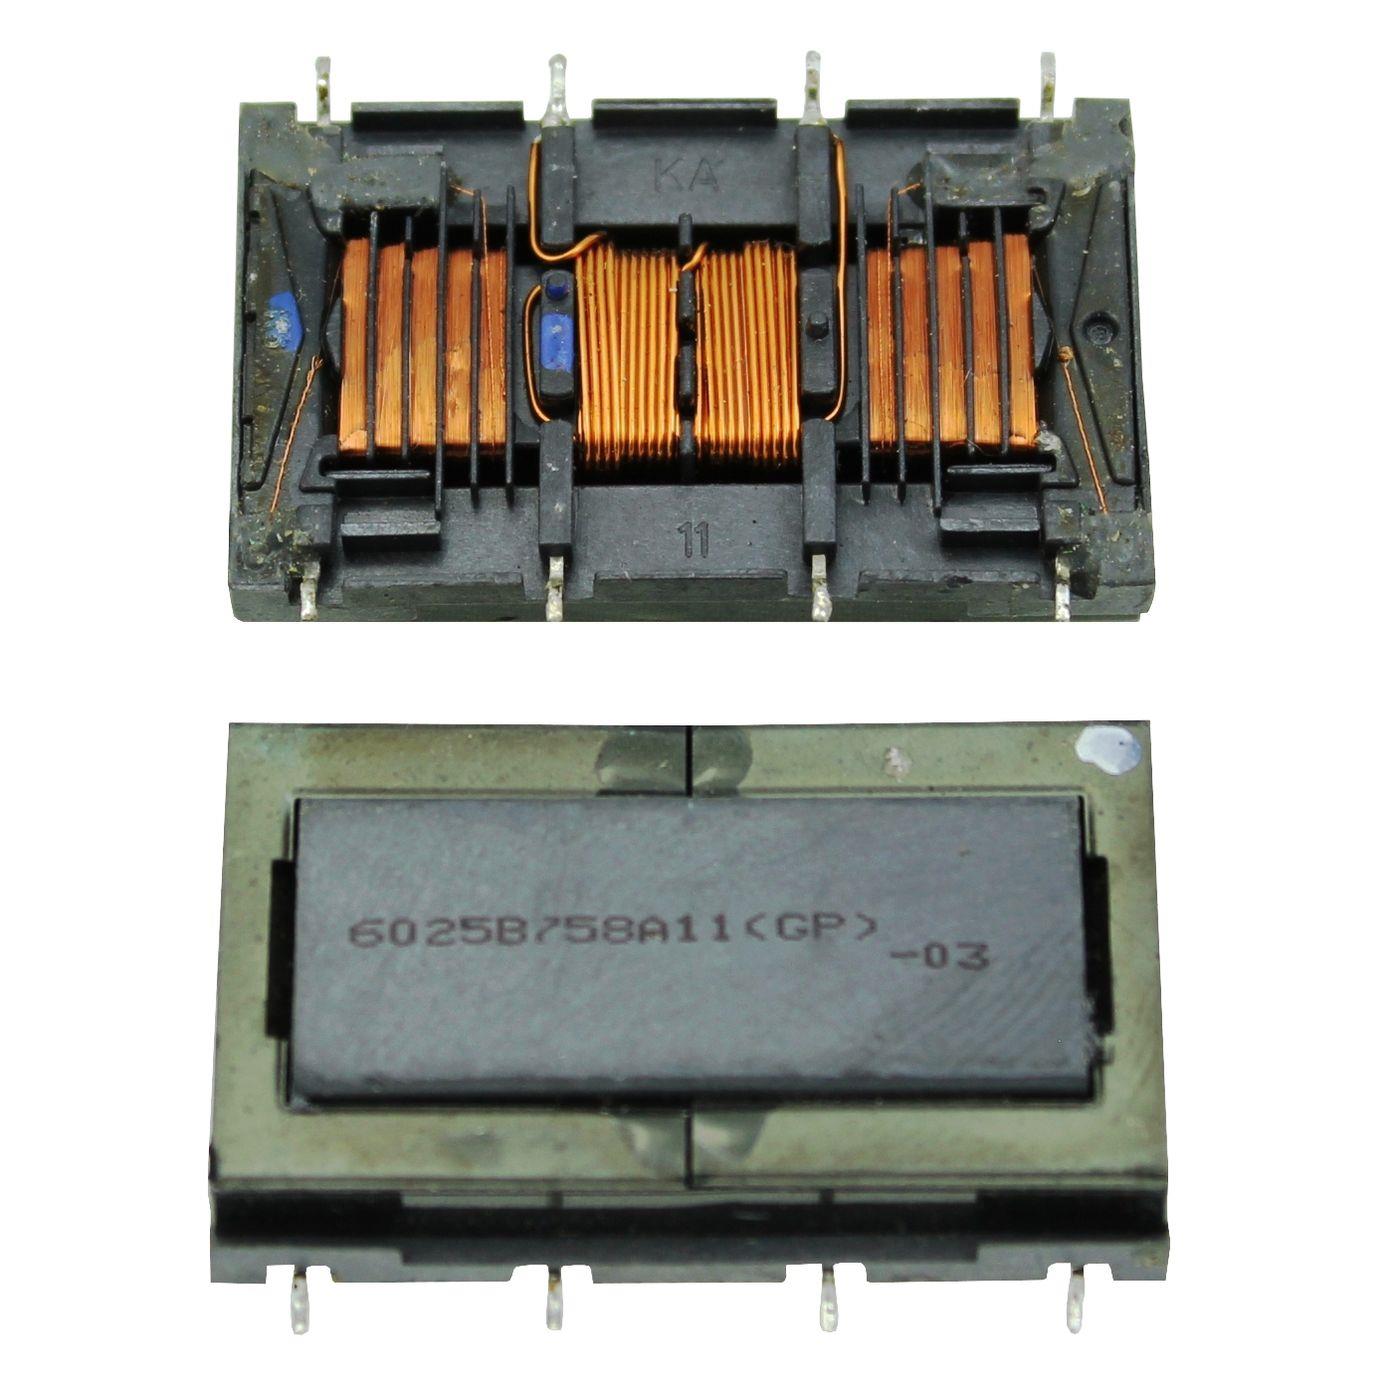 LCD Inverter Transformer Lumonic 6025B Inverter board transformer